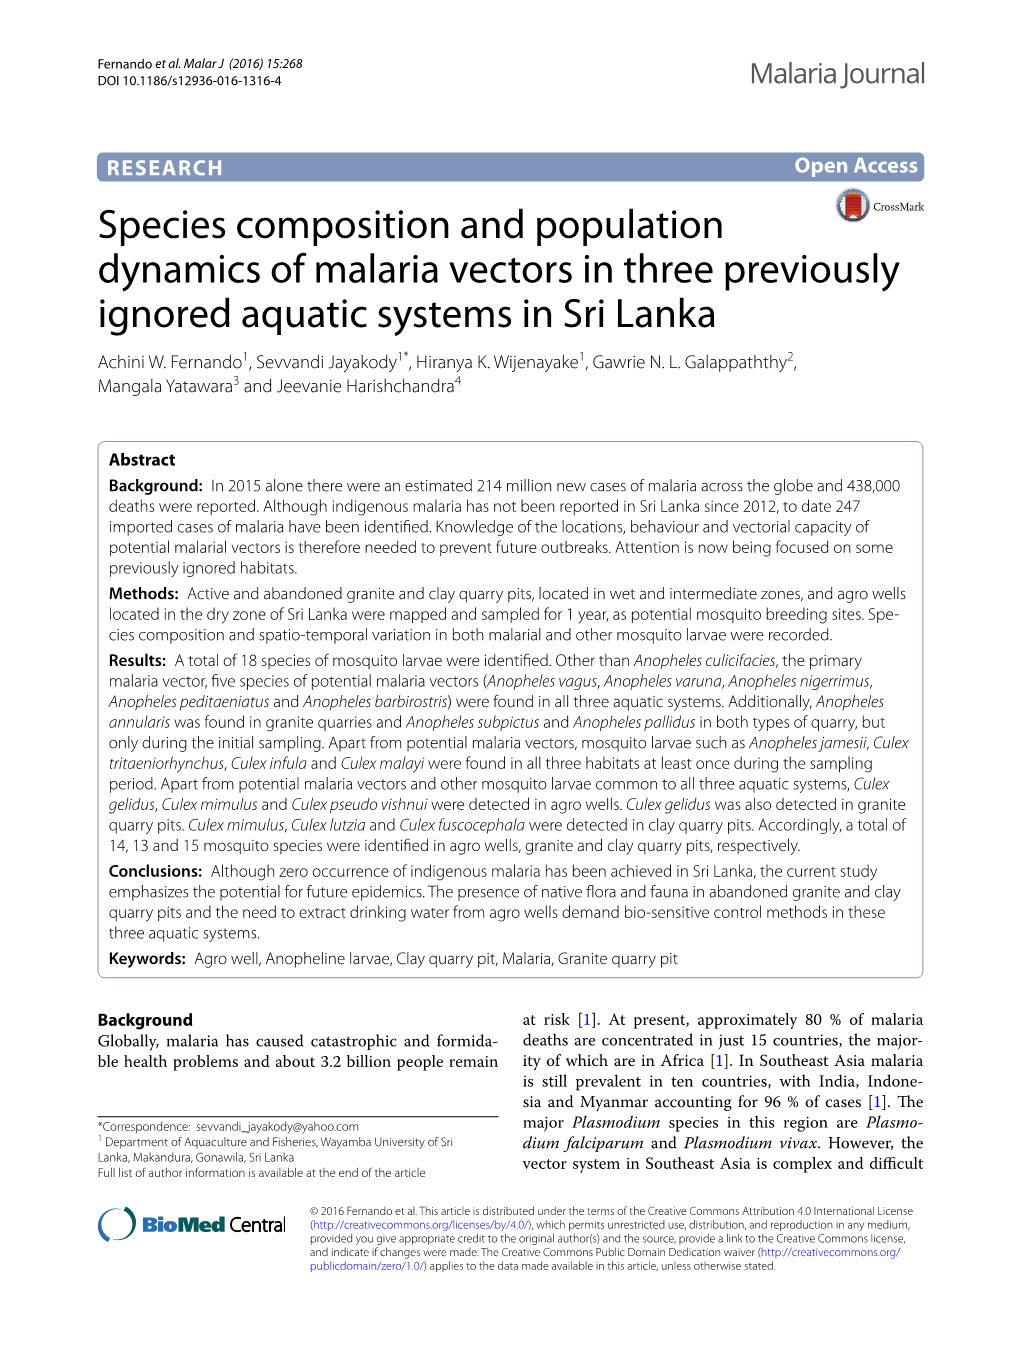 Species Composition and Population Dynamics of Malaria Vectors in Three Previously Ignored Aquatic Systems in Sri Lanka Achini W